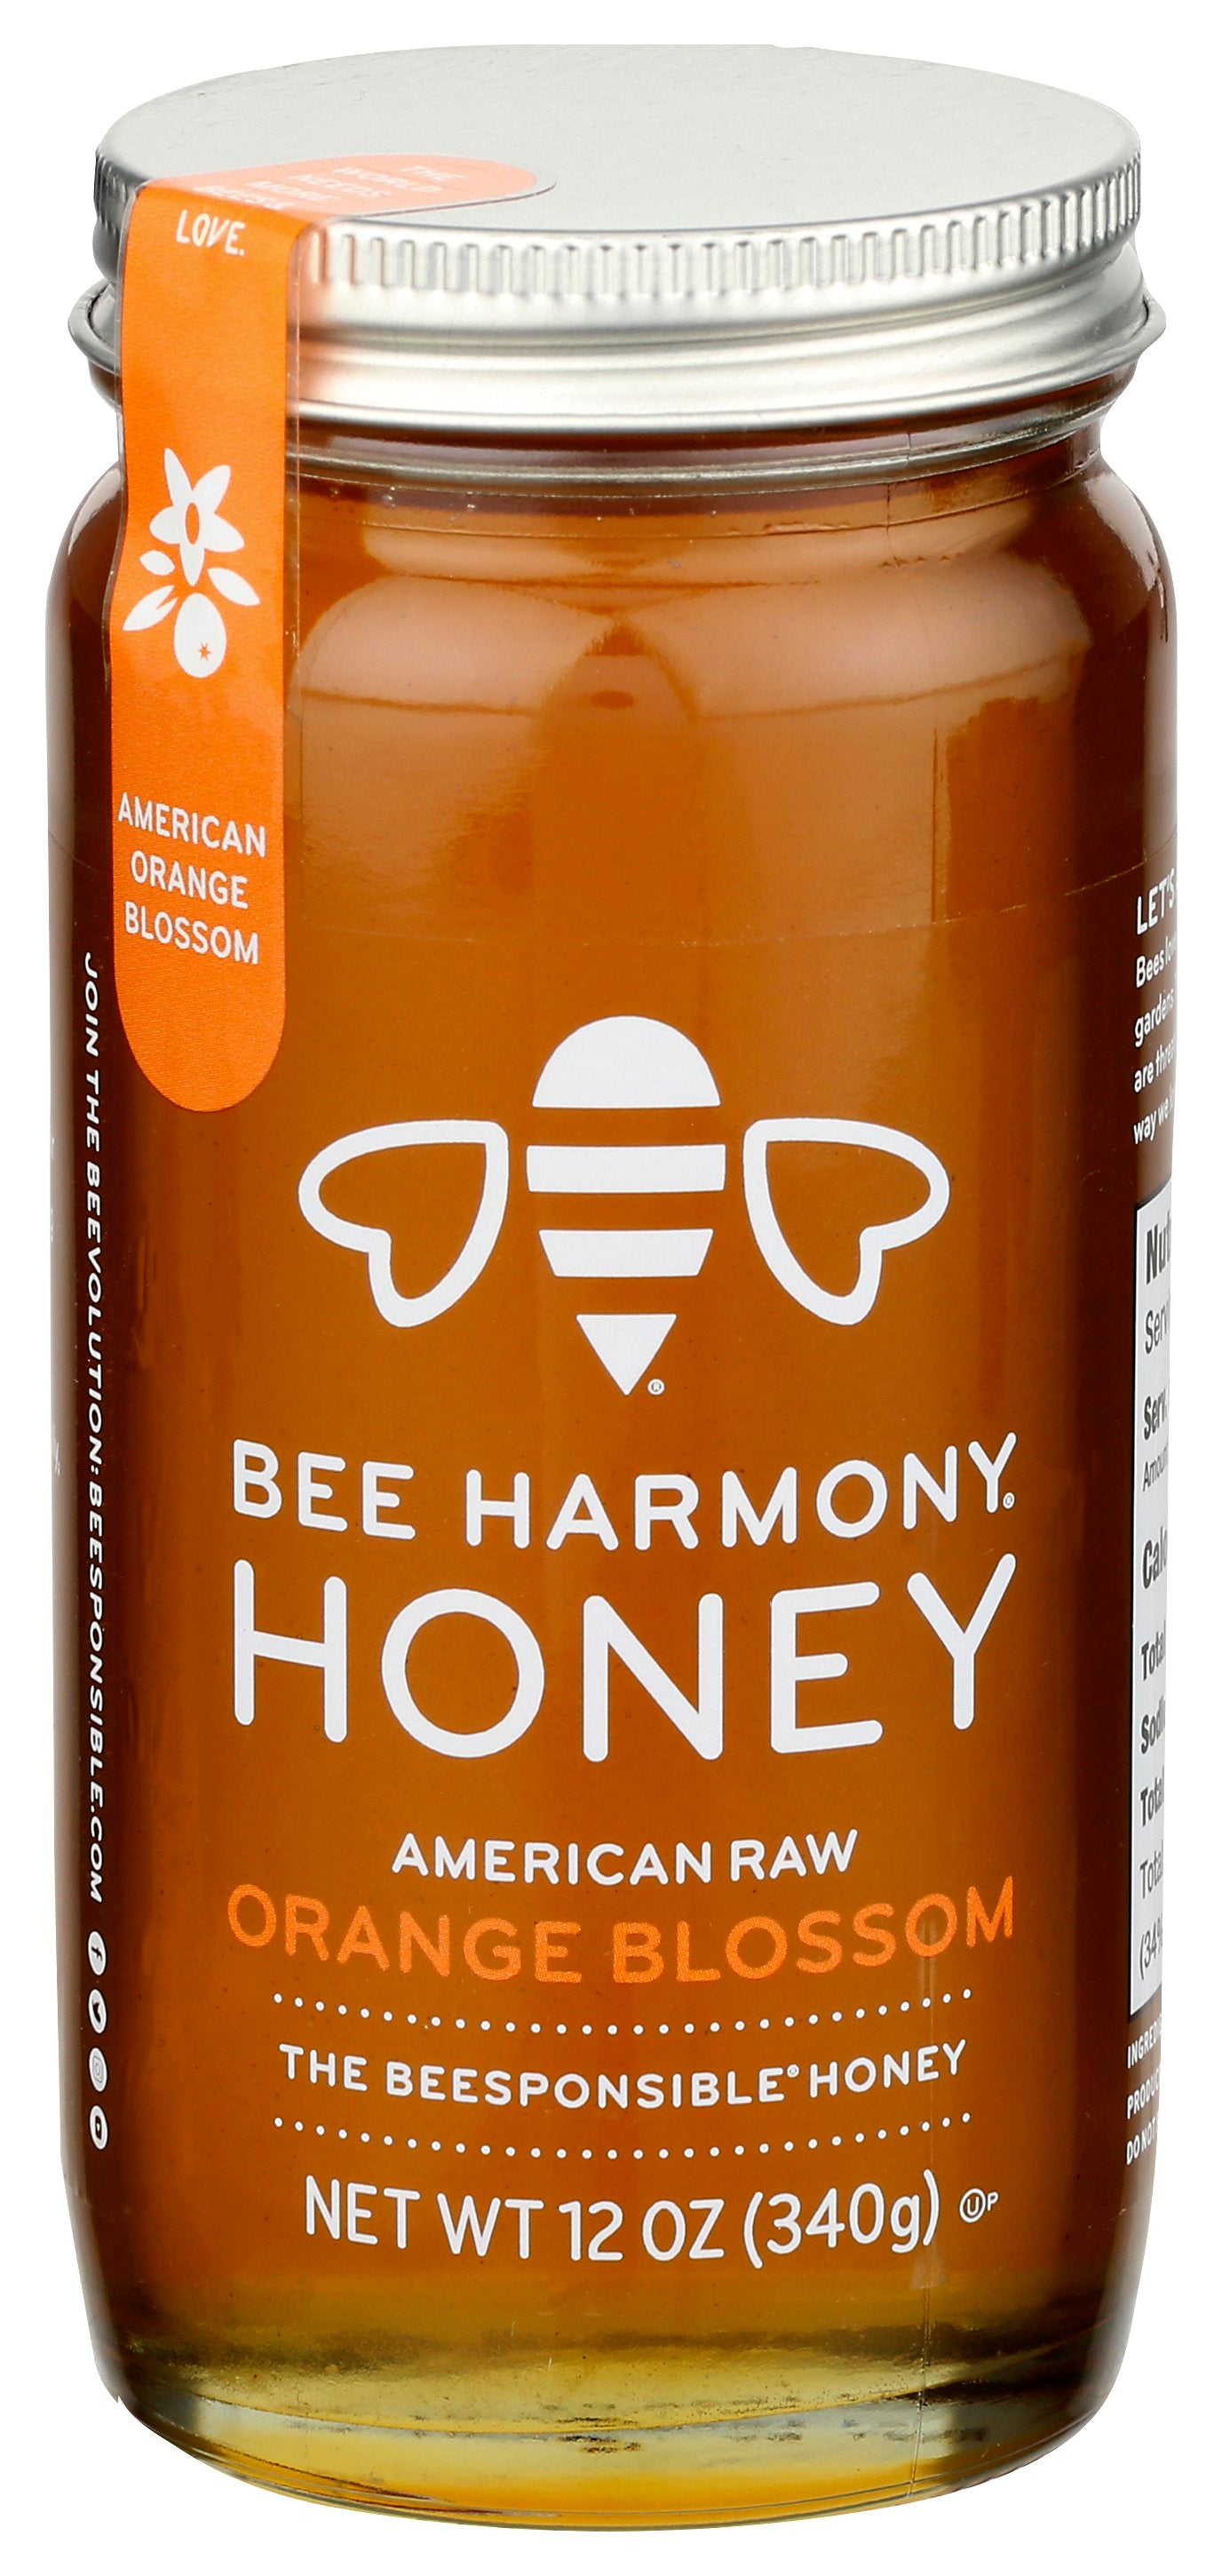 BEE HARMONY HONEY ORANGE BLOSSOM AMER - Case of 6